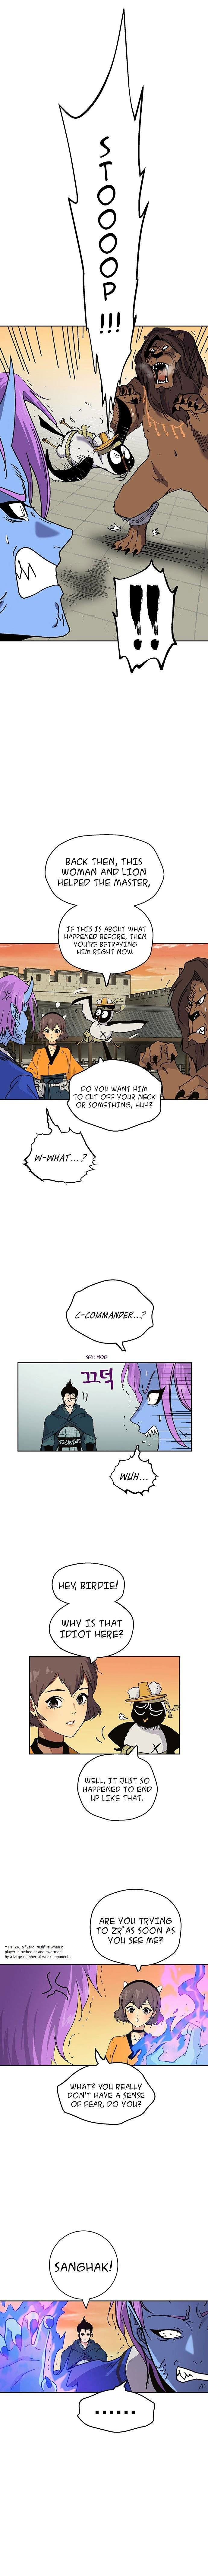 Taebaek: The Tutorial Man Chapter 27 page 12